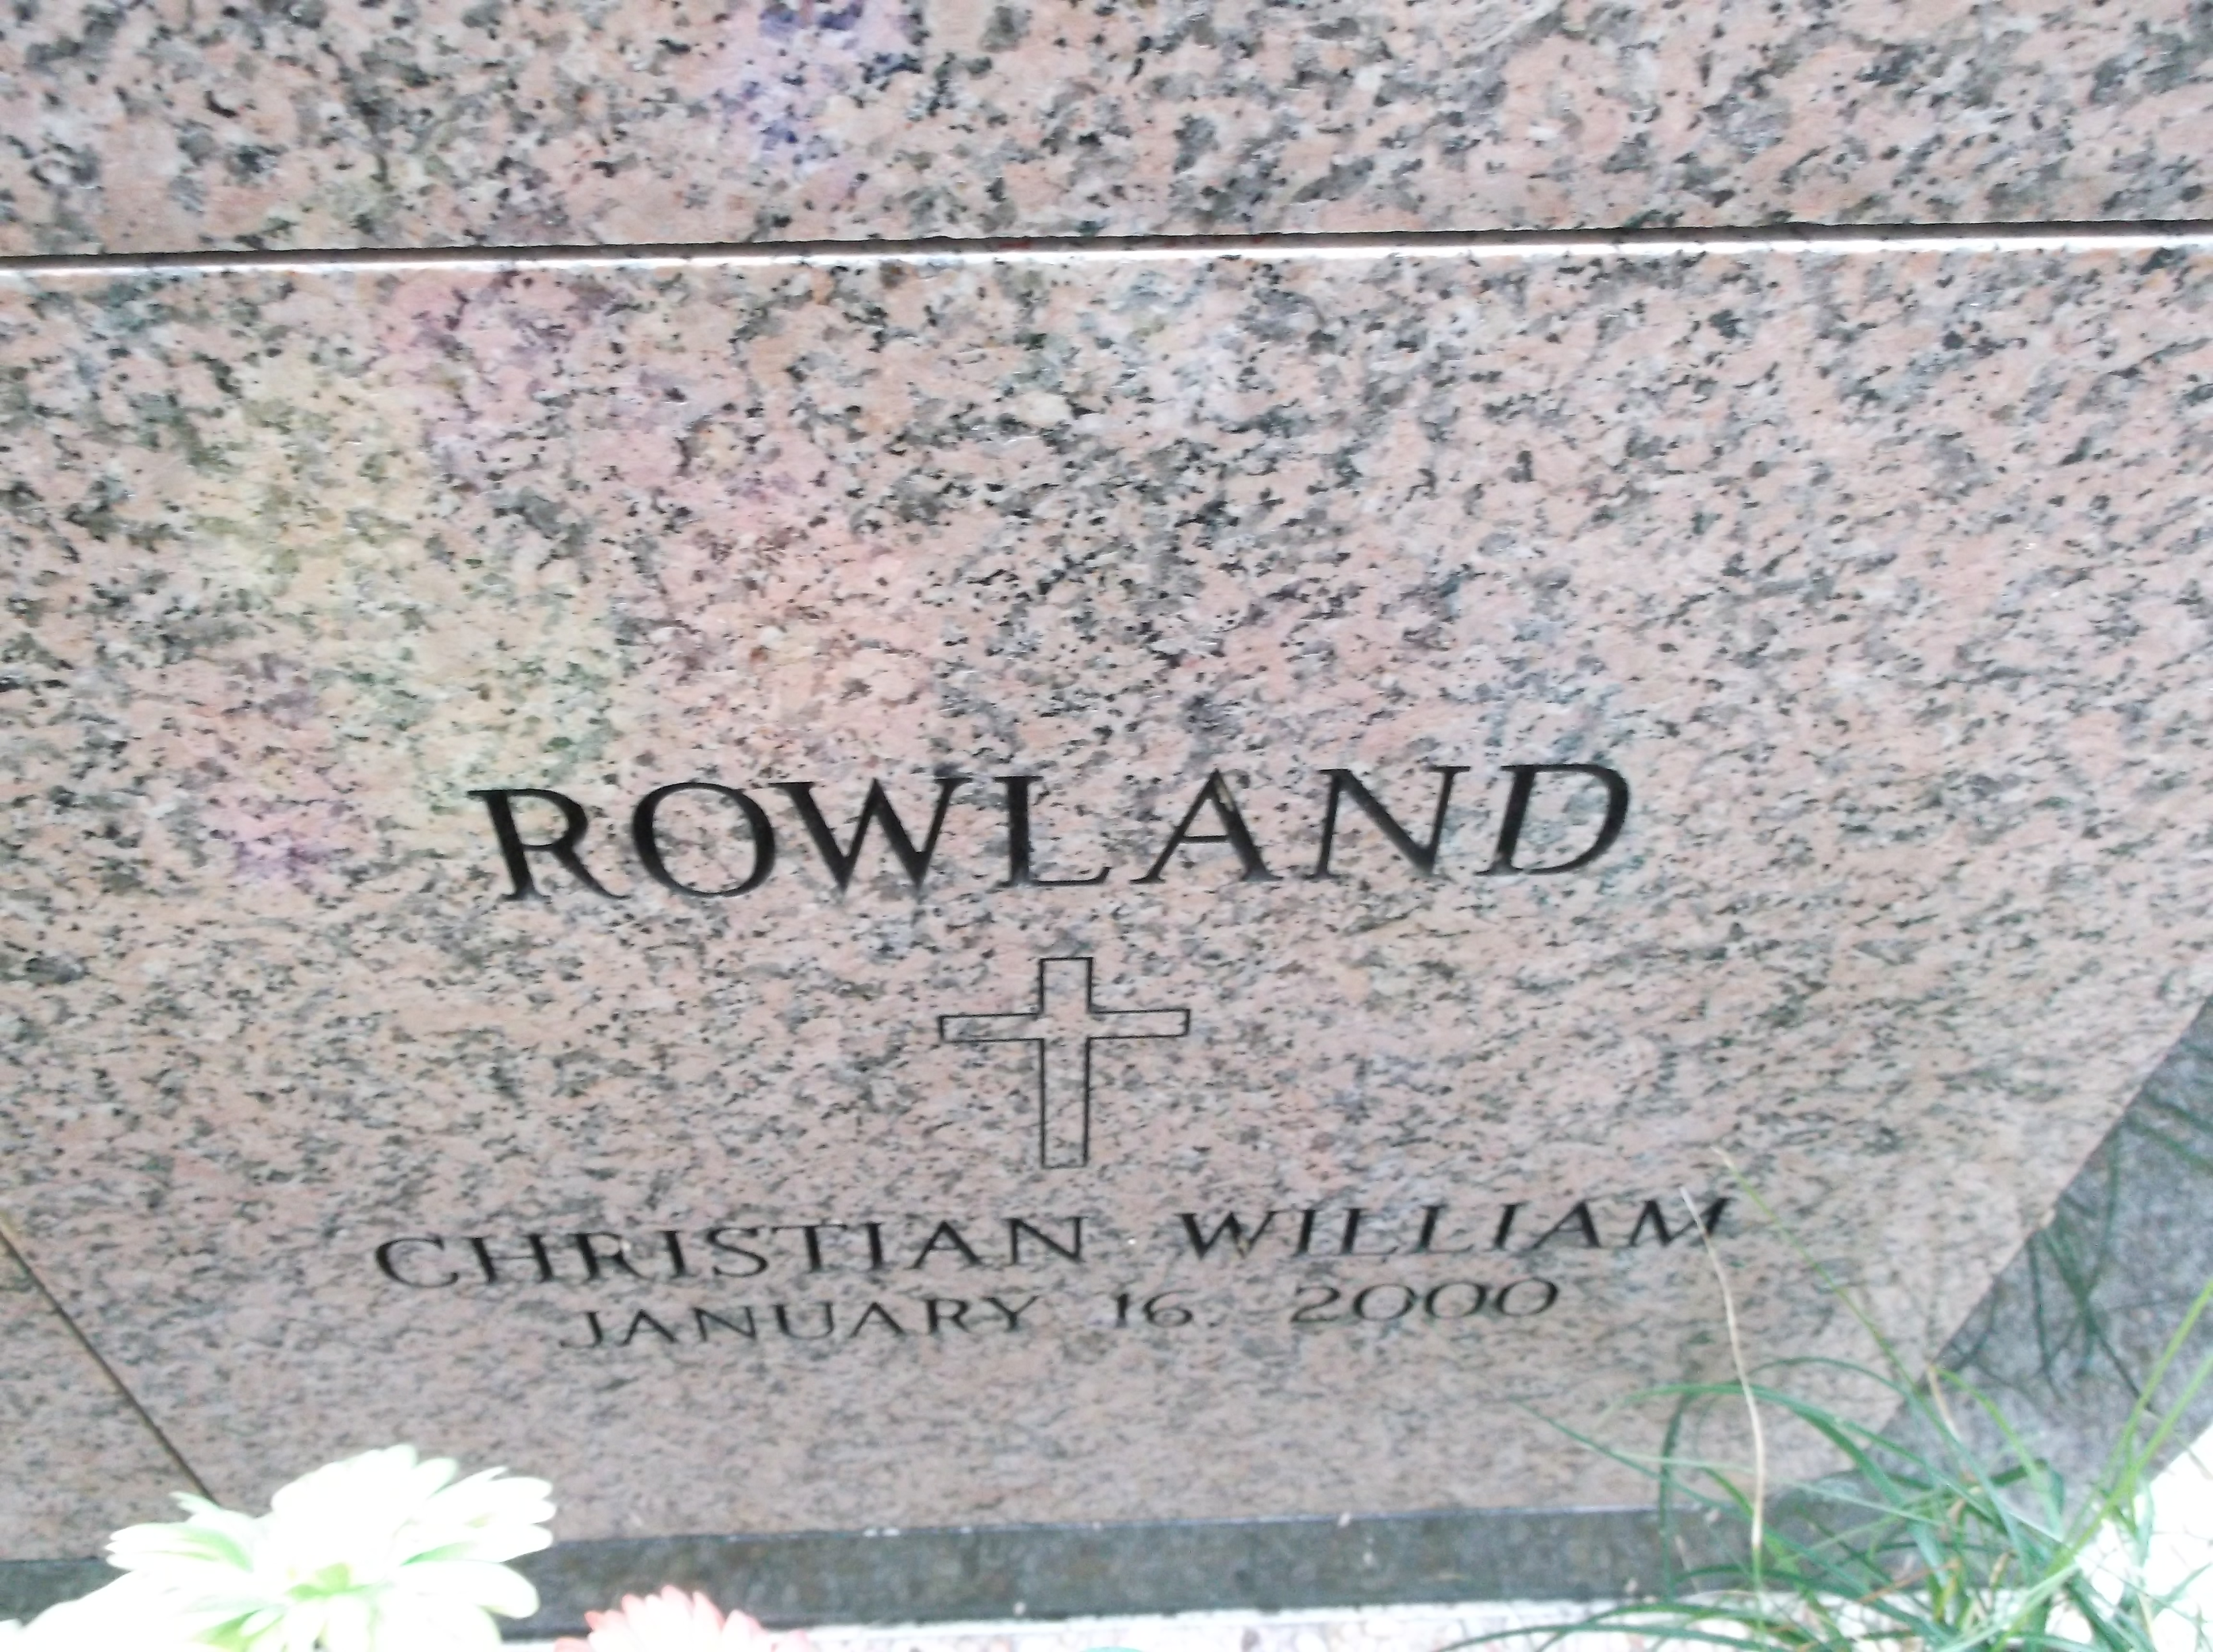 Christian William Rowland